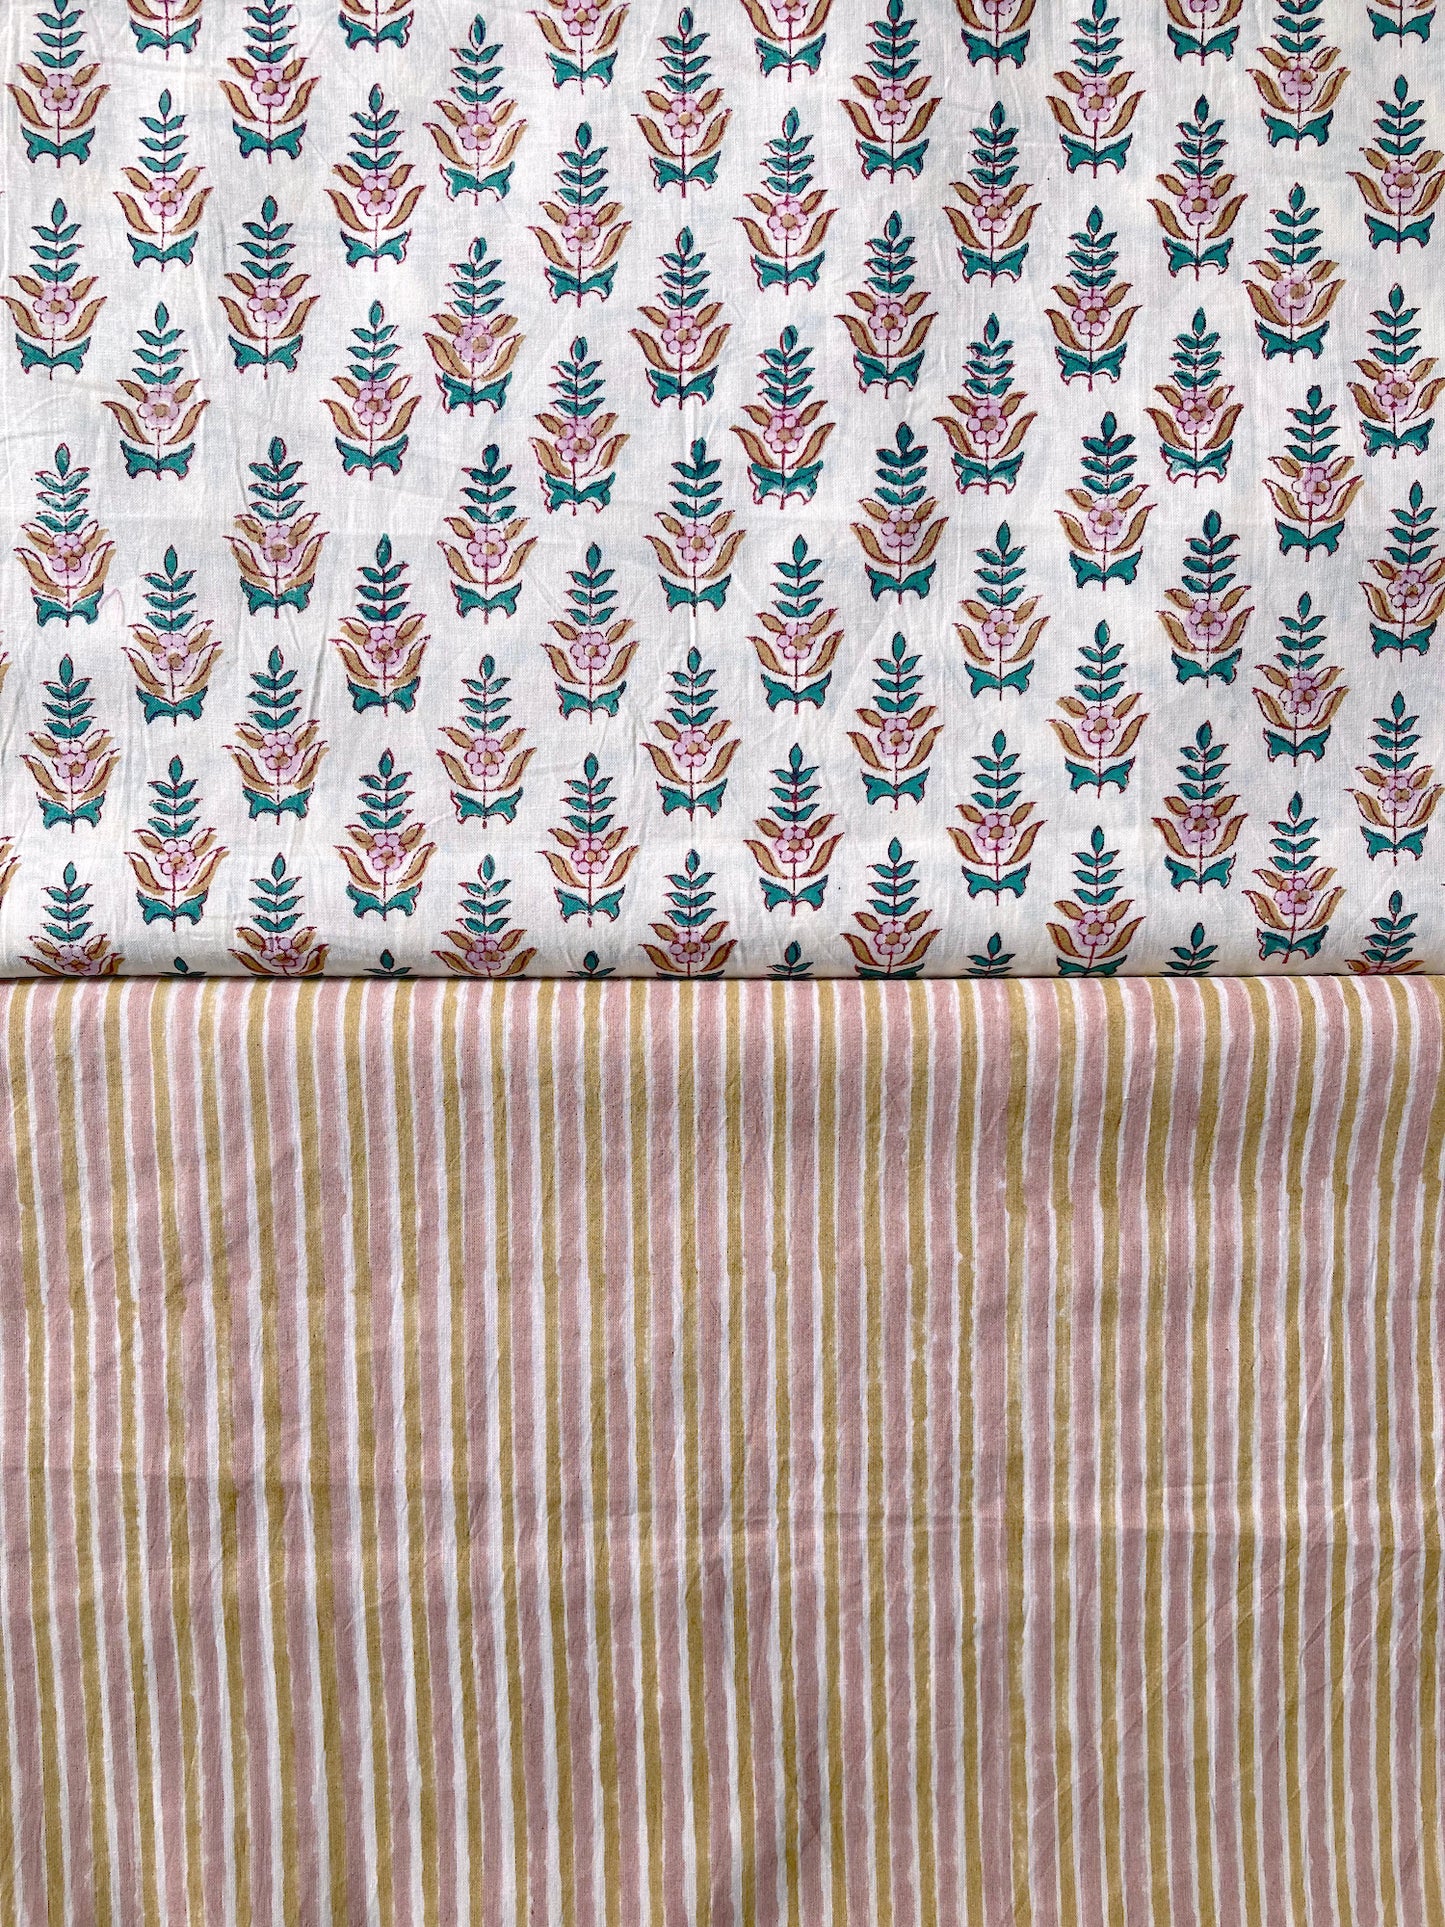 Hand Block printed Cotton Fabric #185-22